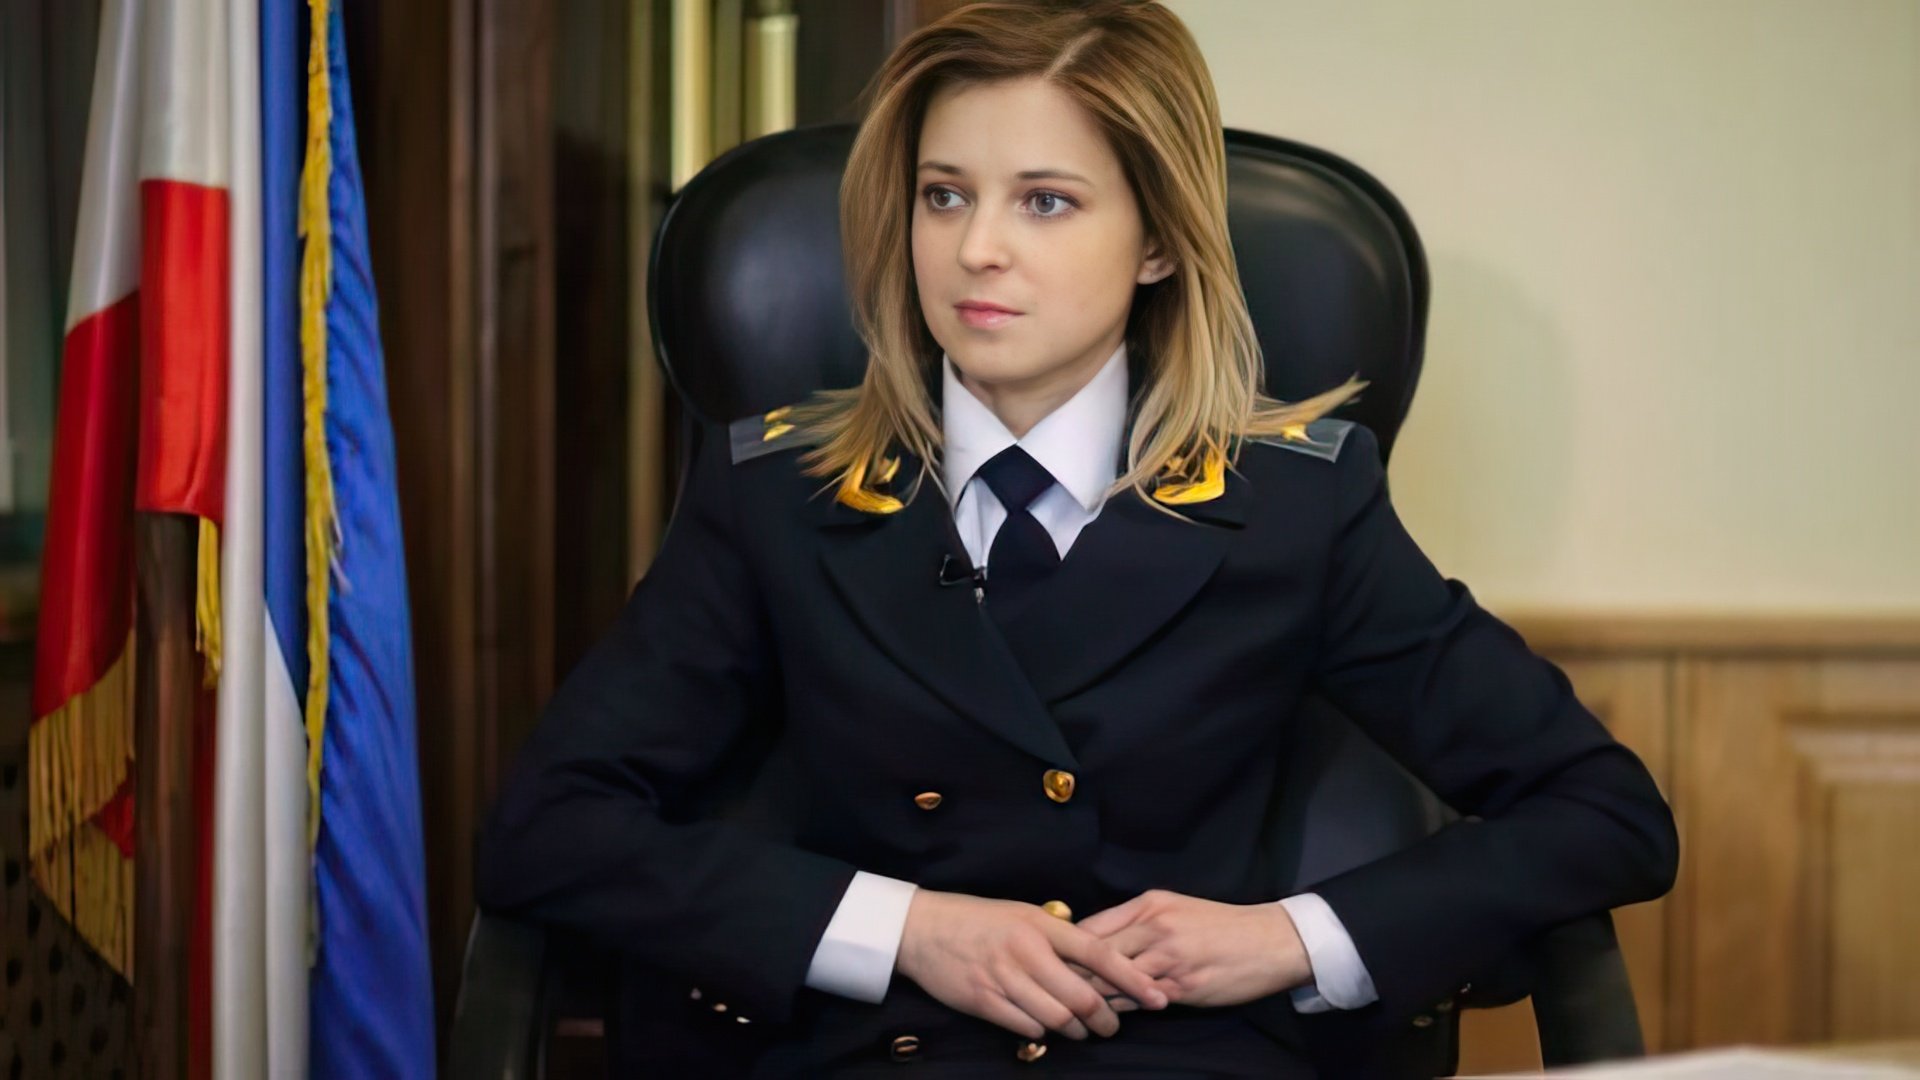 Natalia Poklonskaya is Ex-Prosecutor of Crimea and State Duma deputy